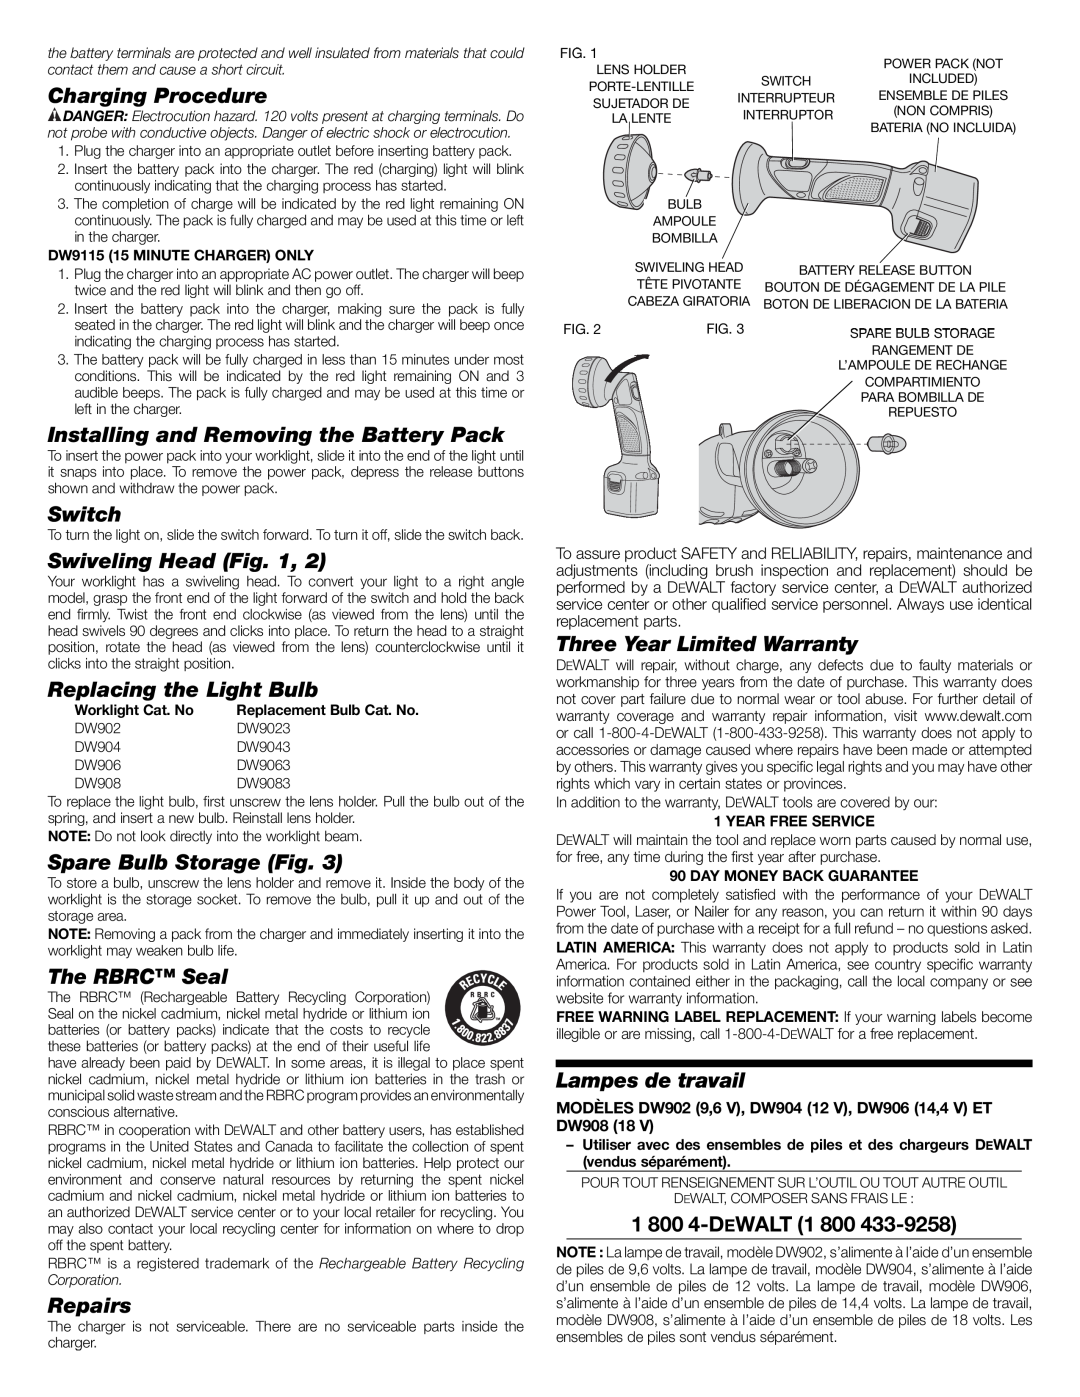 DeWalt DW904 important safety instructions 1 800 4-DEWALT1, Charging Procedure 